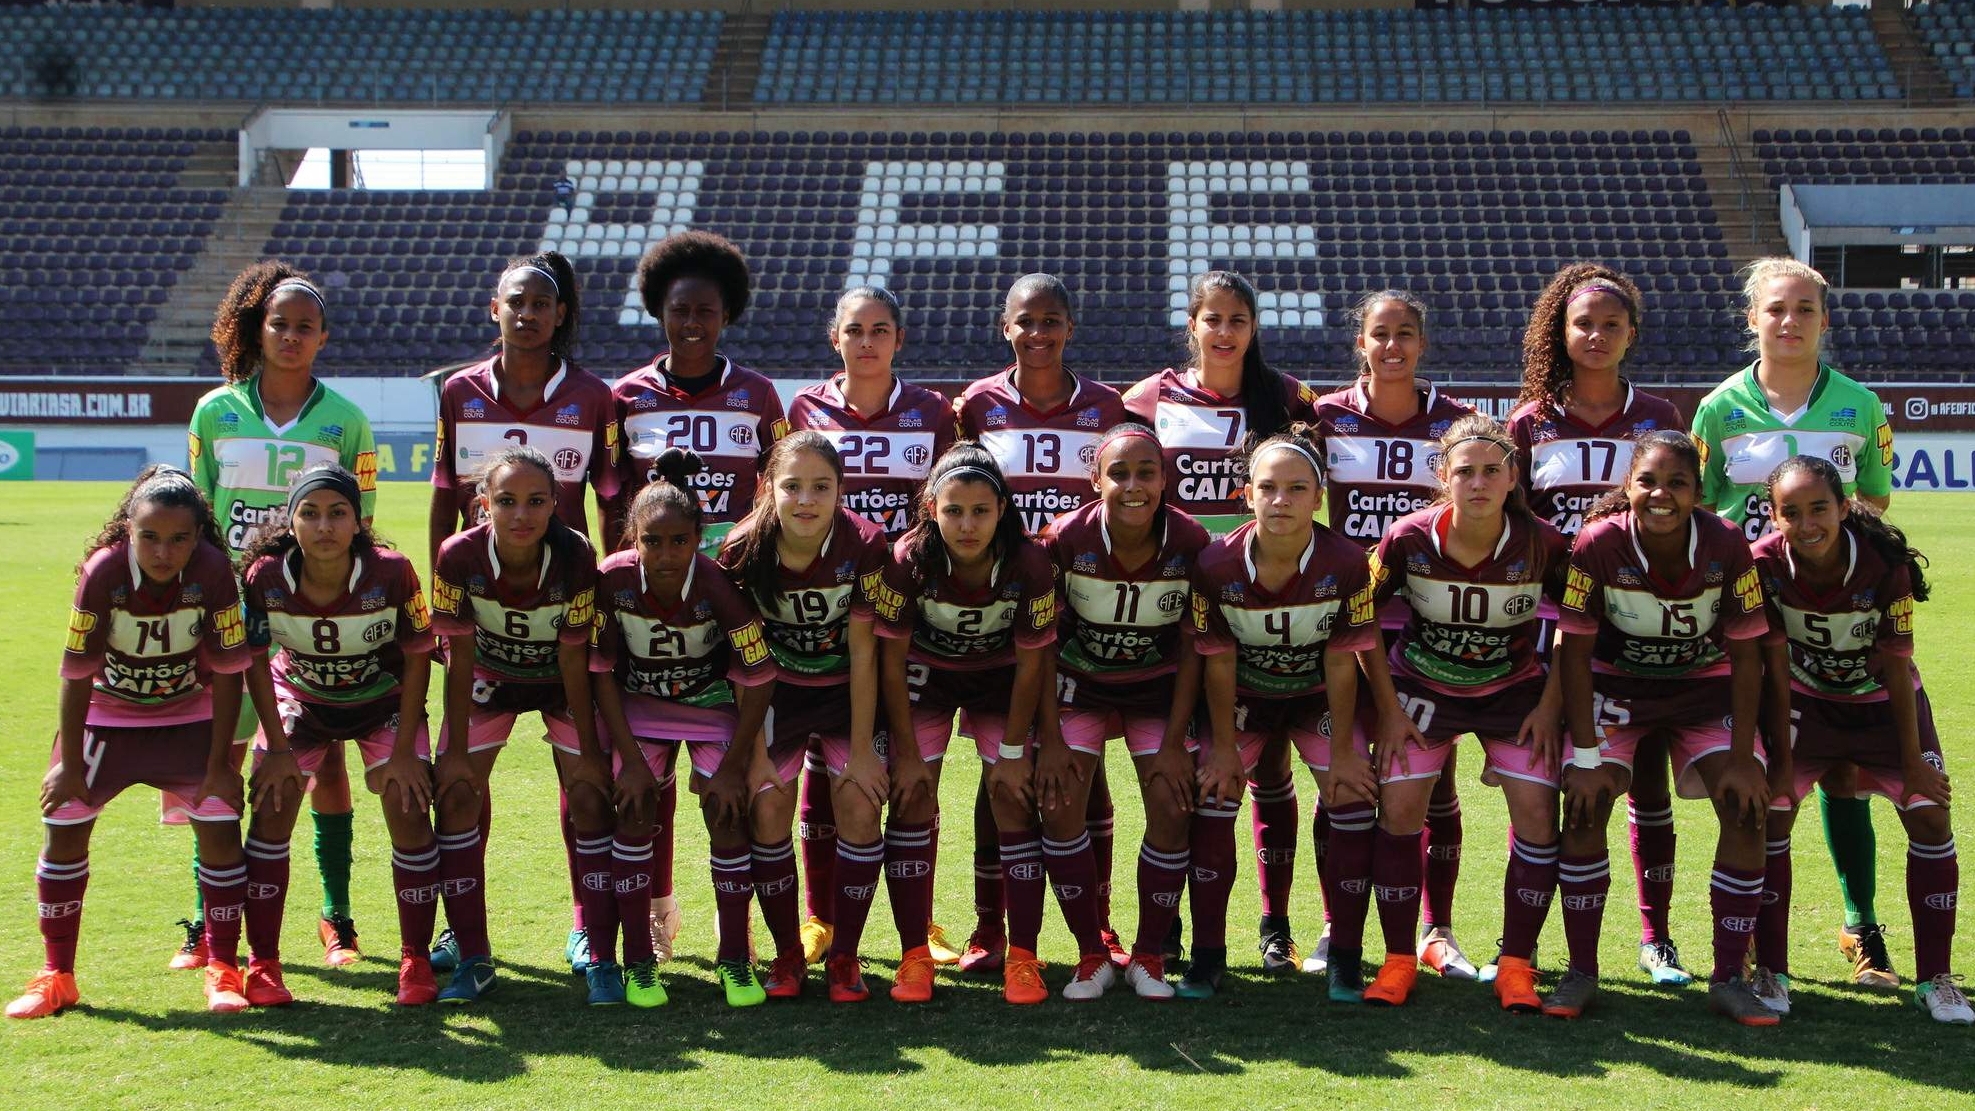 Campeonato Paulista de Futebol Feminino Sub-17 de 2020 – Wikipédia